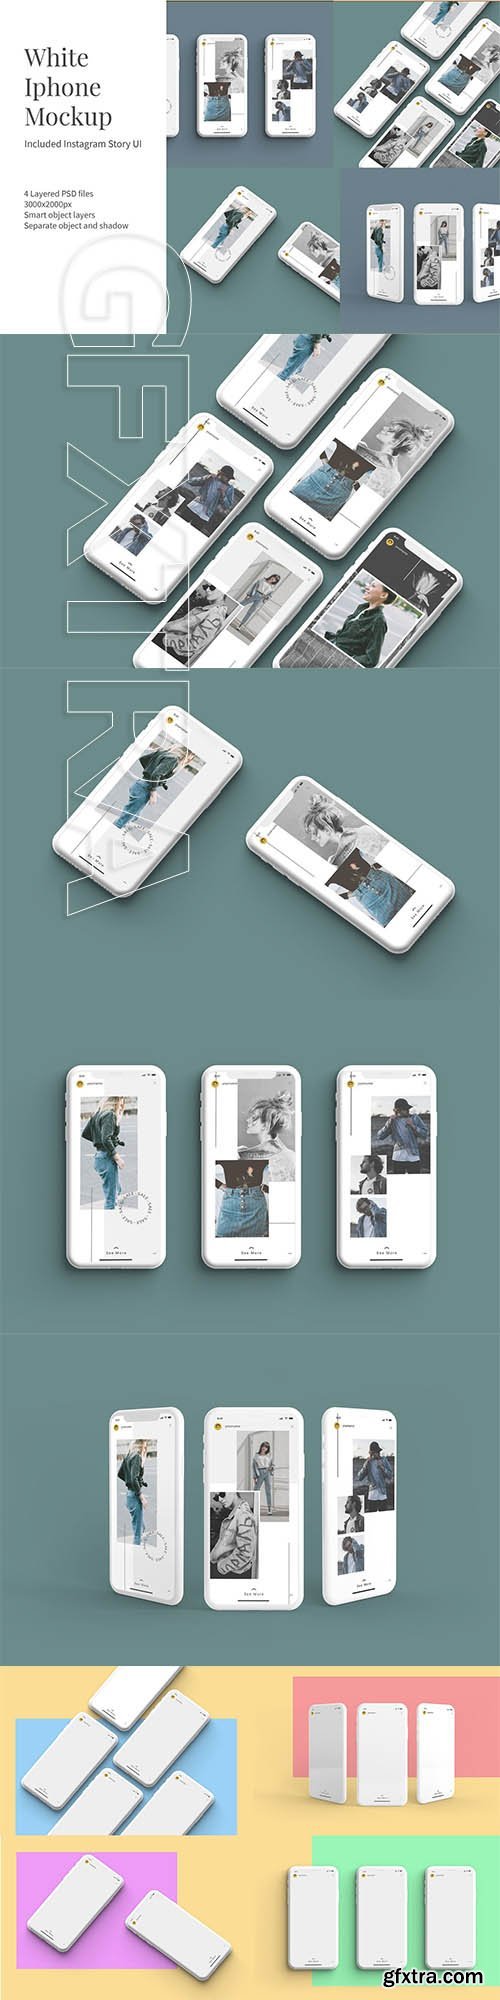 CreativeMarket - White Iphone Mockup + InstaStory UI 5825026